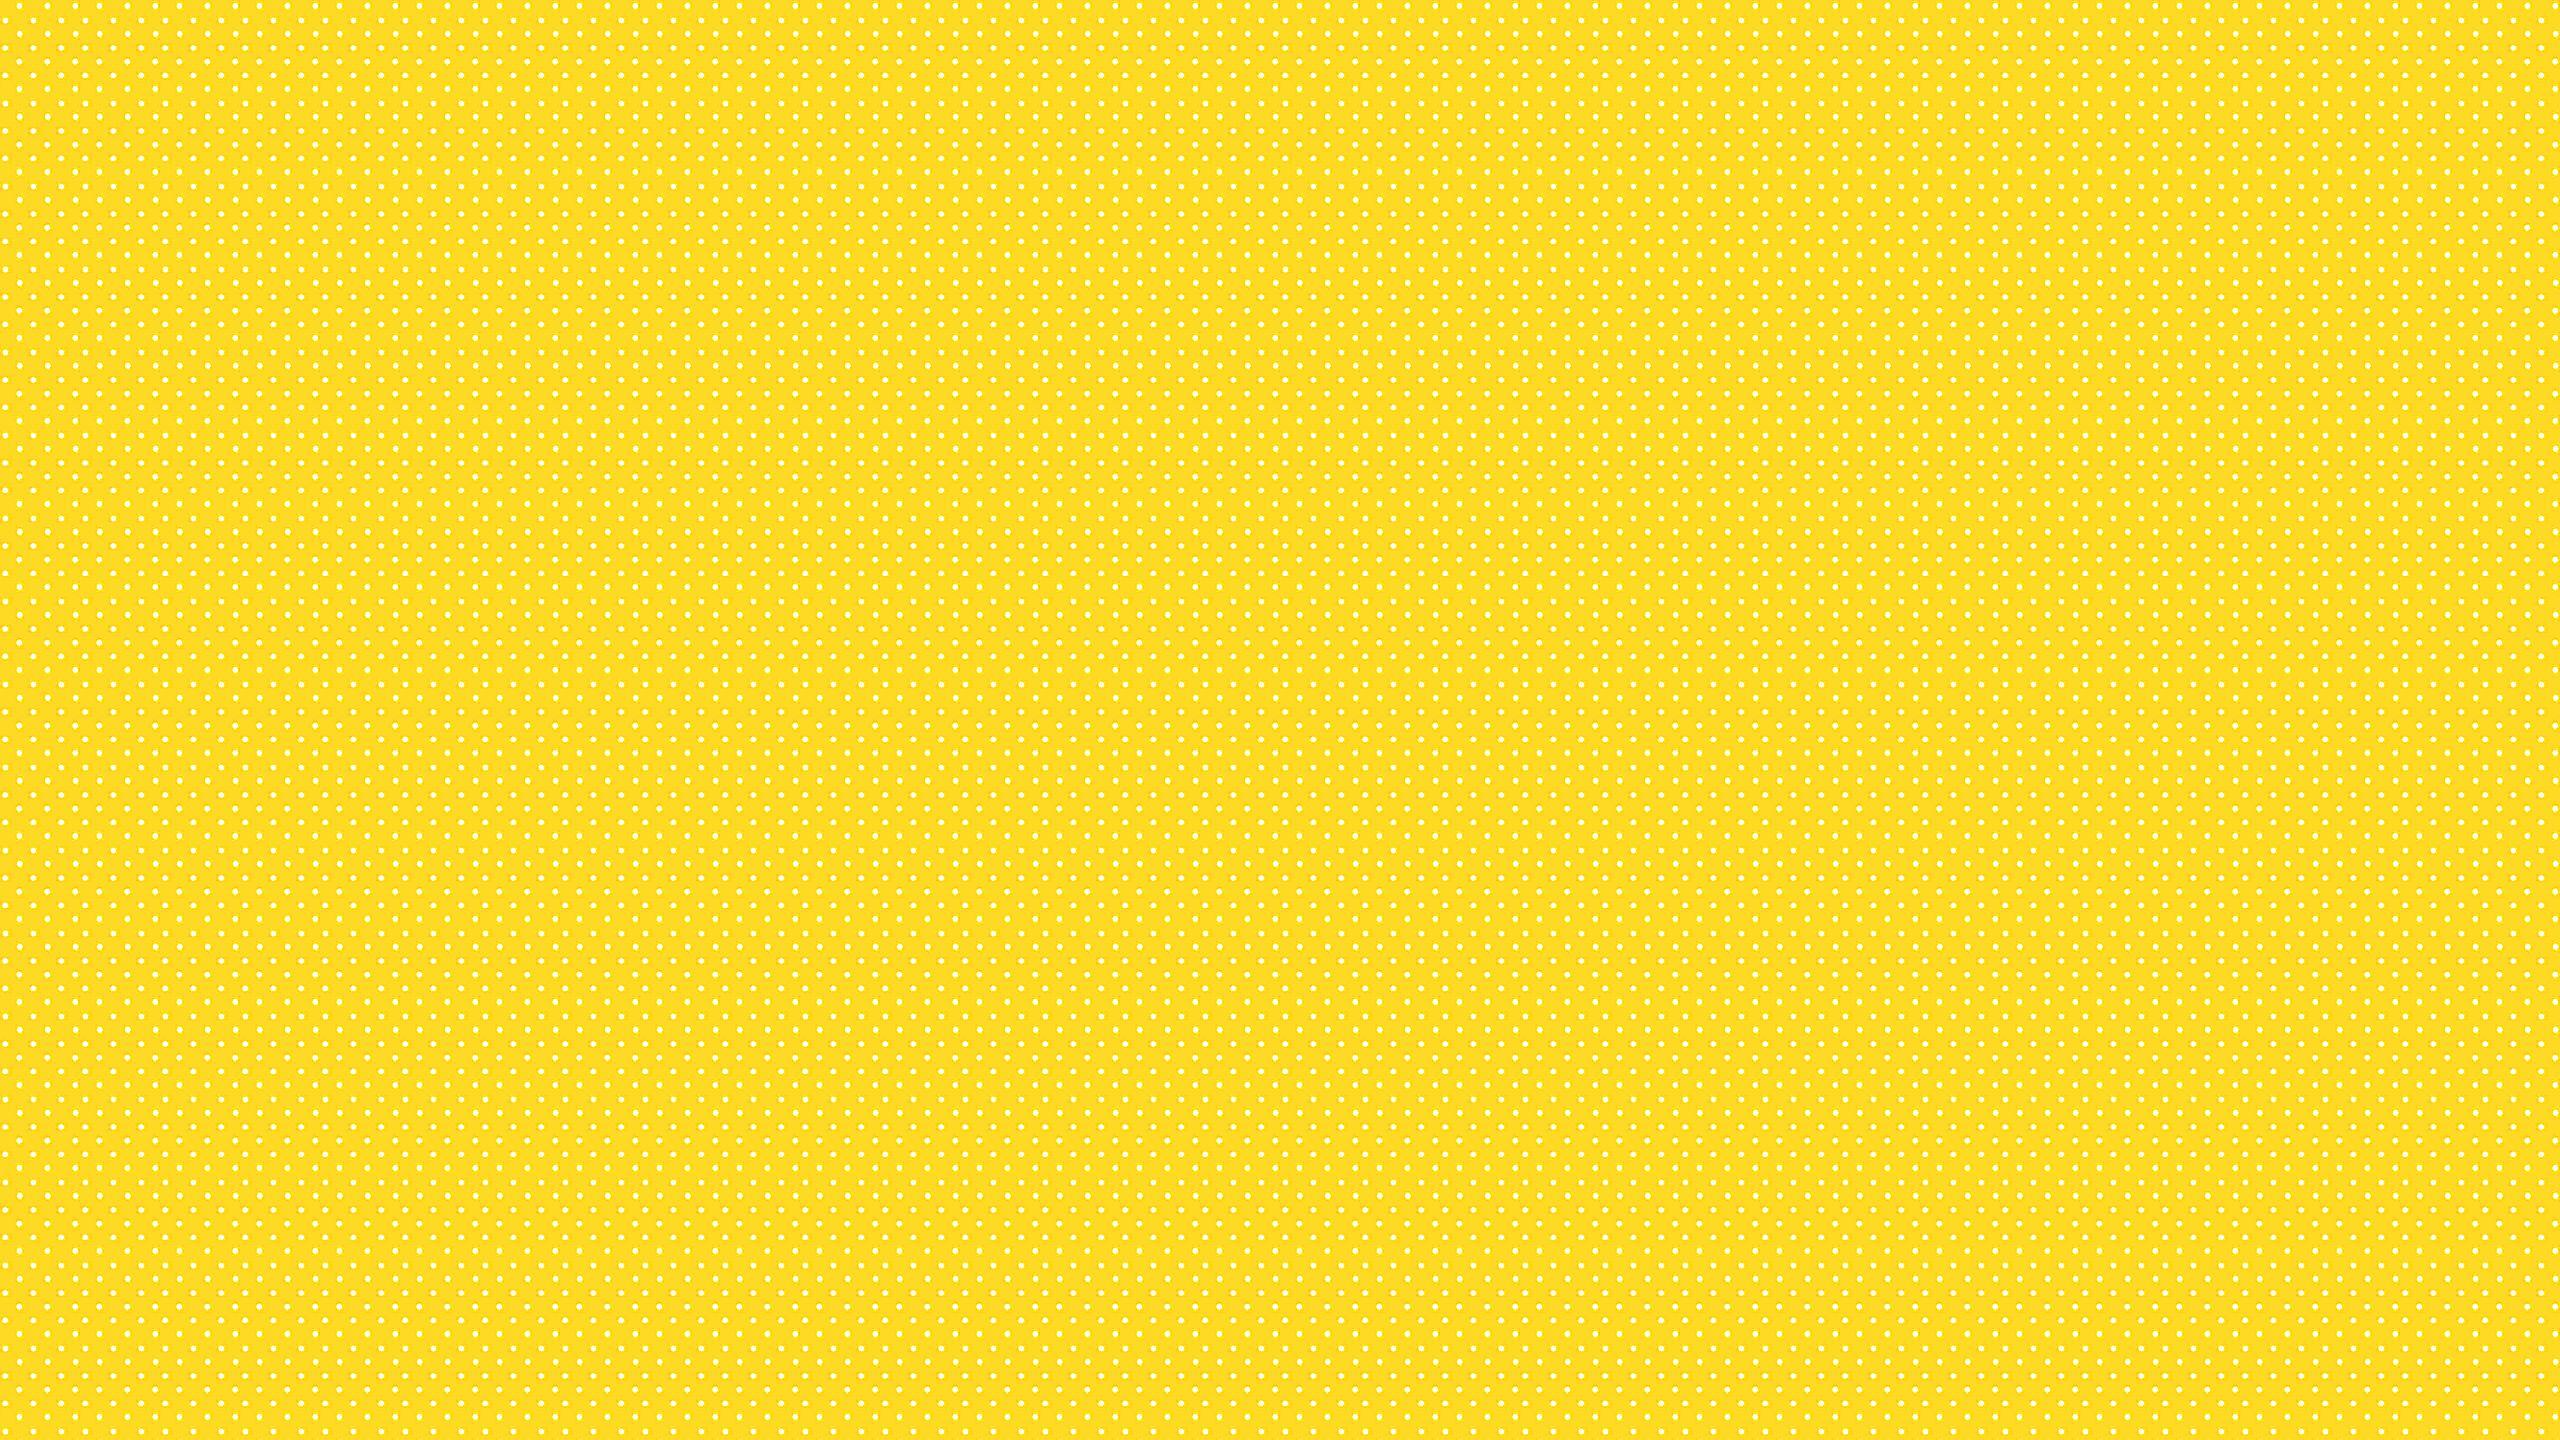 20 Neon Yellow Aesthetic Wallpaper Pictures